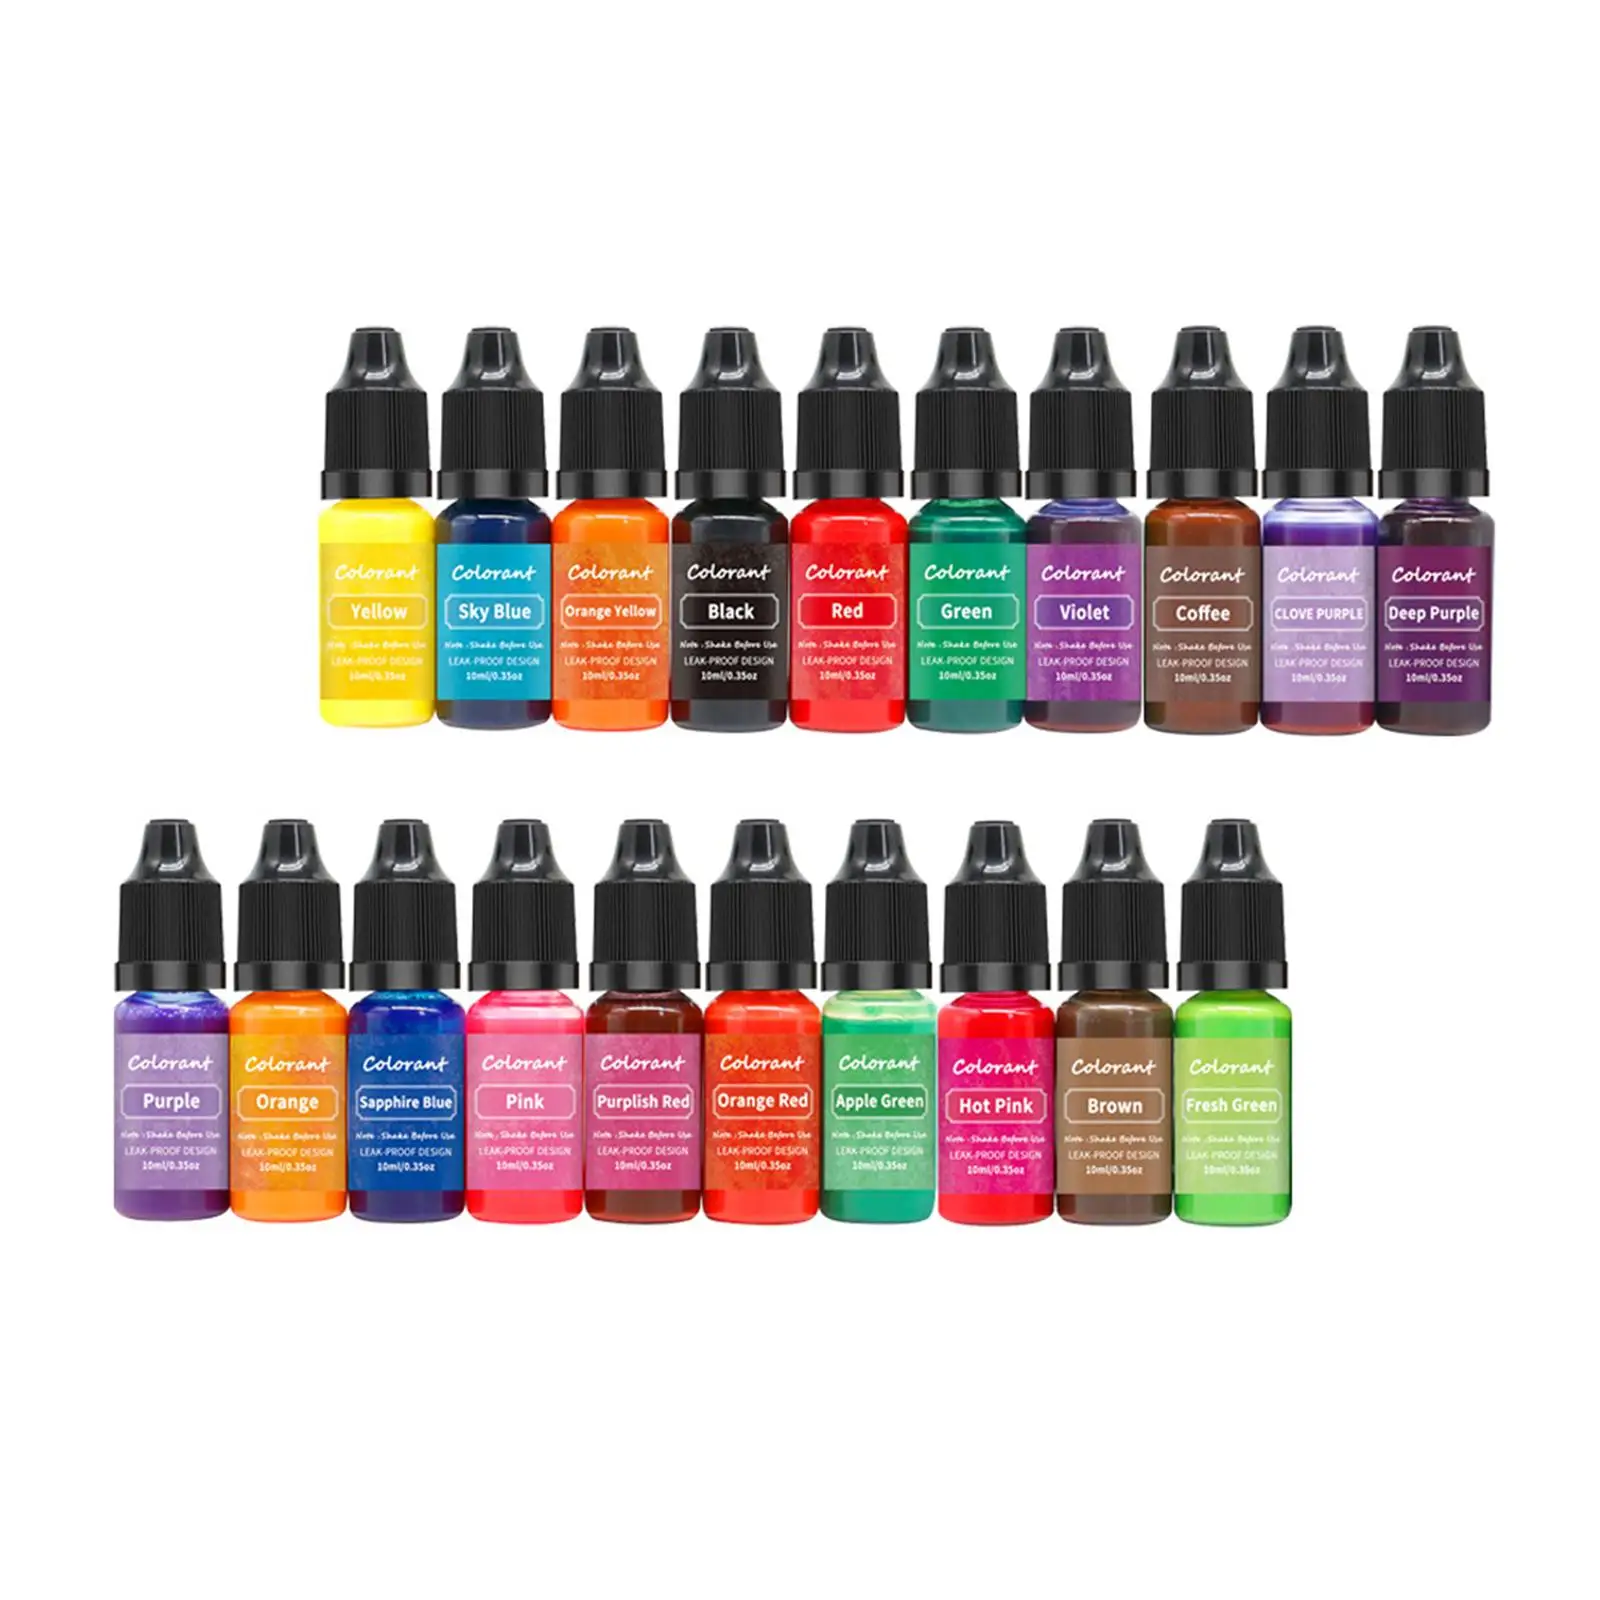 20 Colors Candle Dyes Pigment Liquid Colorant Pigment DIY Candle Soap Coloring Handmade Crafts Resin Pigment